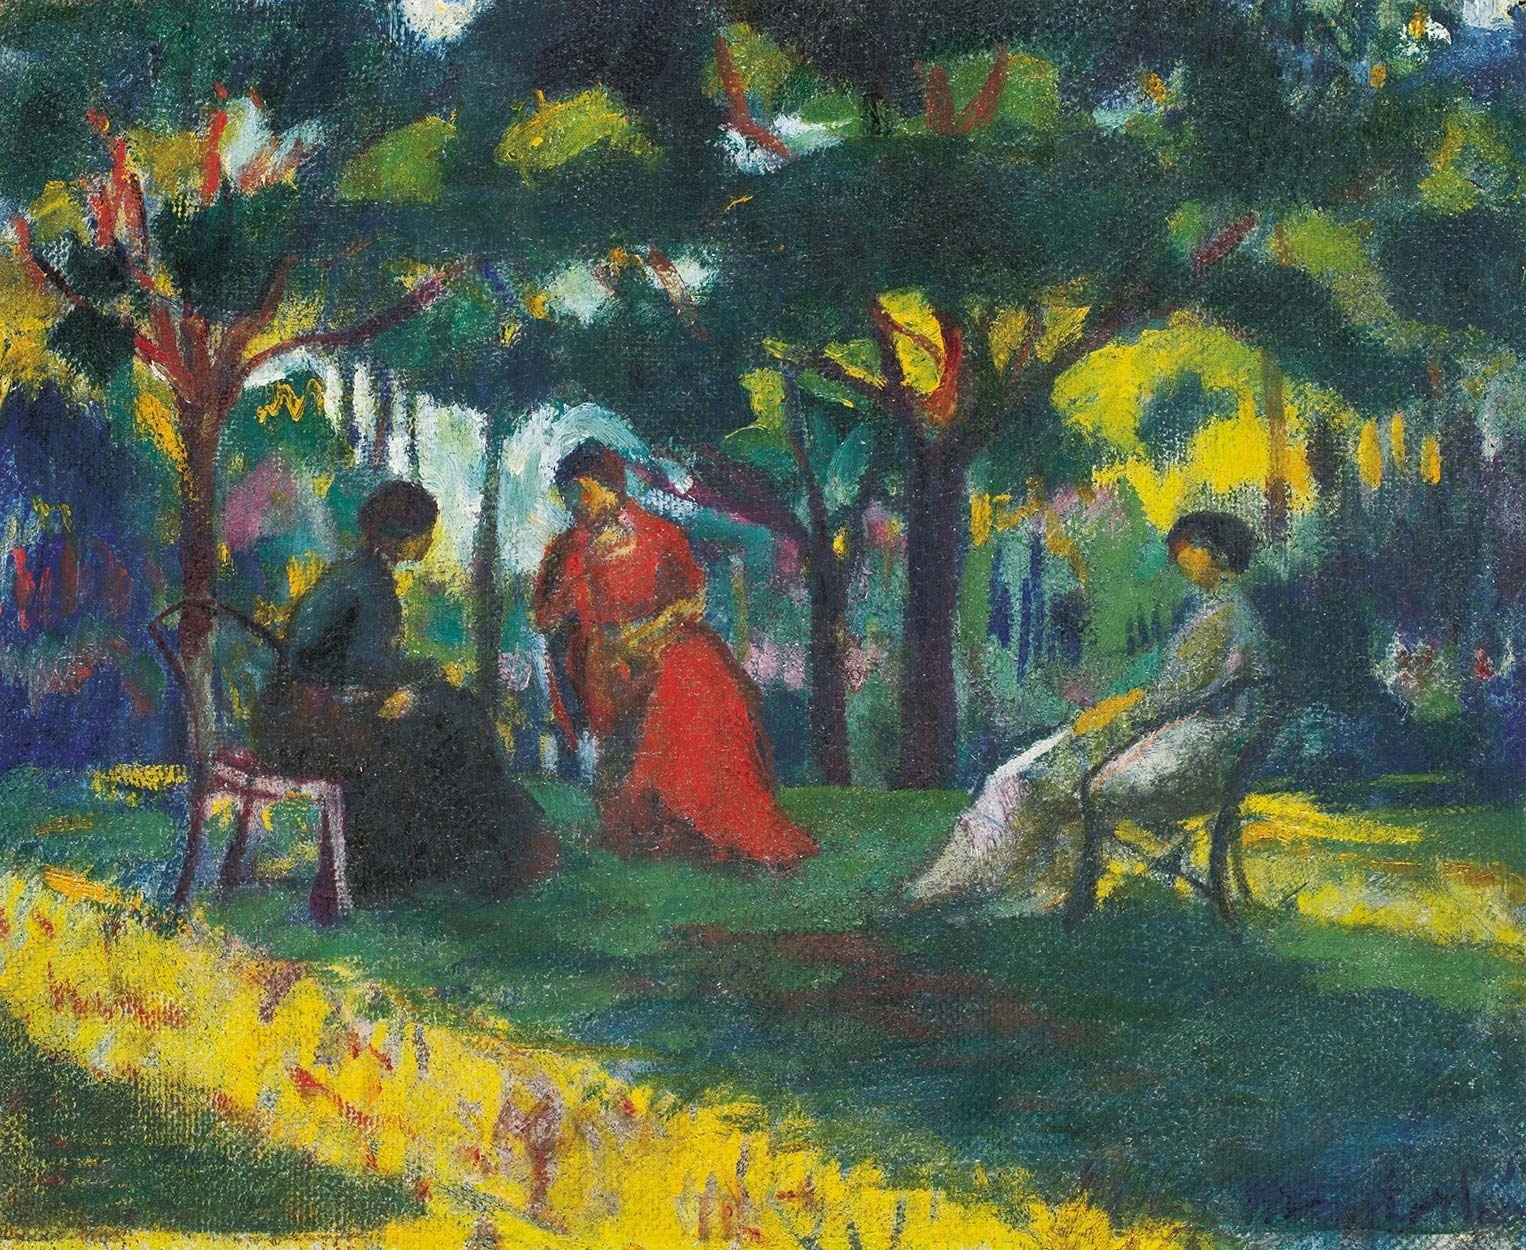 Kernstok Károly (1873-1940) Sitting in a park (Nap), c. 1909